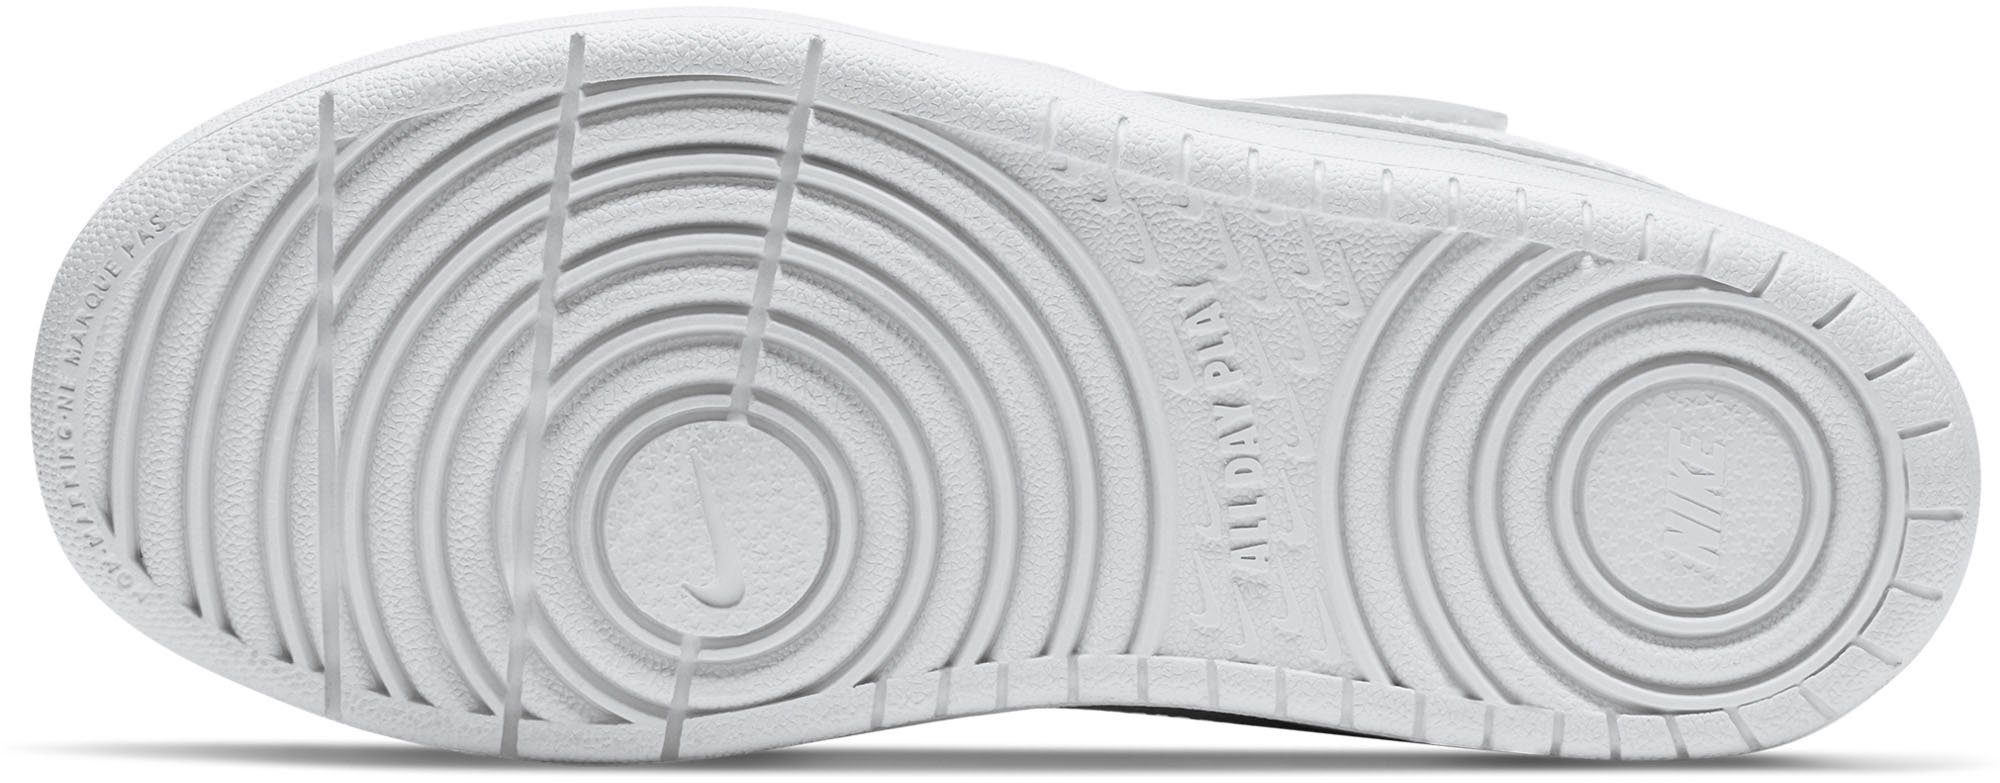 Nike Sportswear COURT BOROUGH Spuren den Sneaker LOW Air 2 Design Force auf 1 des